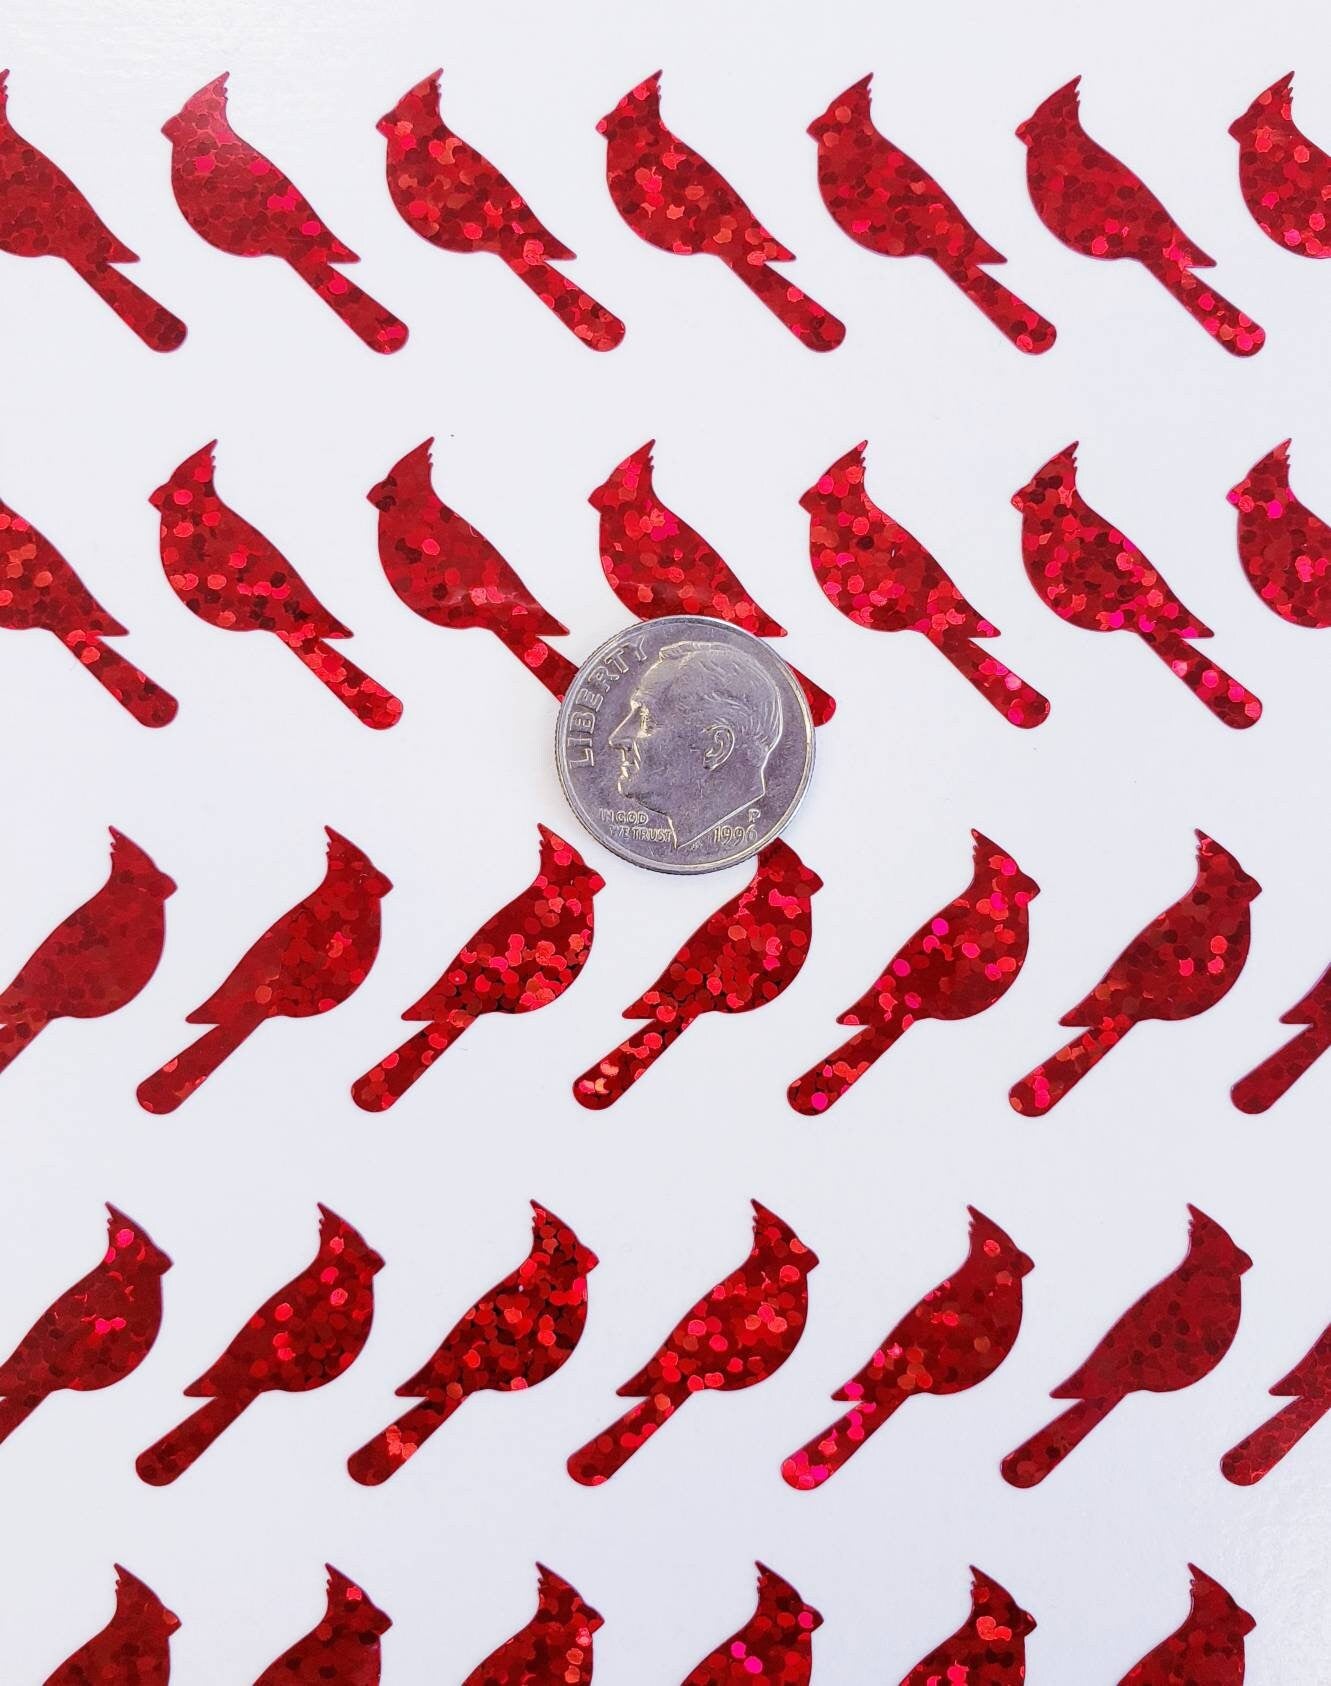 Red Cardinal Bird Stickers, set of 50 bird shaped vinyl decals, red glitter ornament stickers